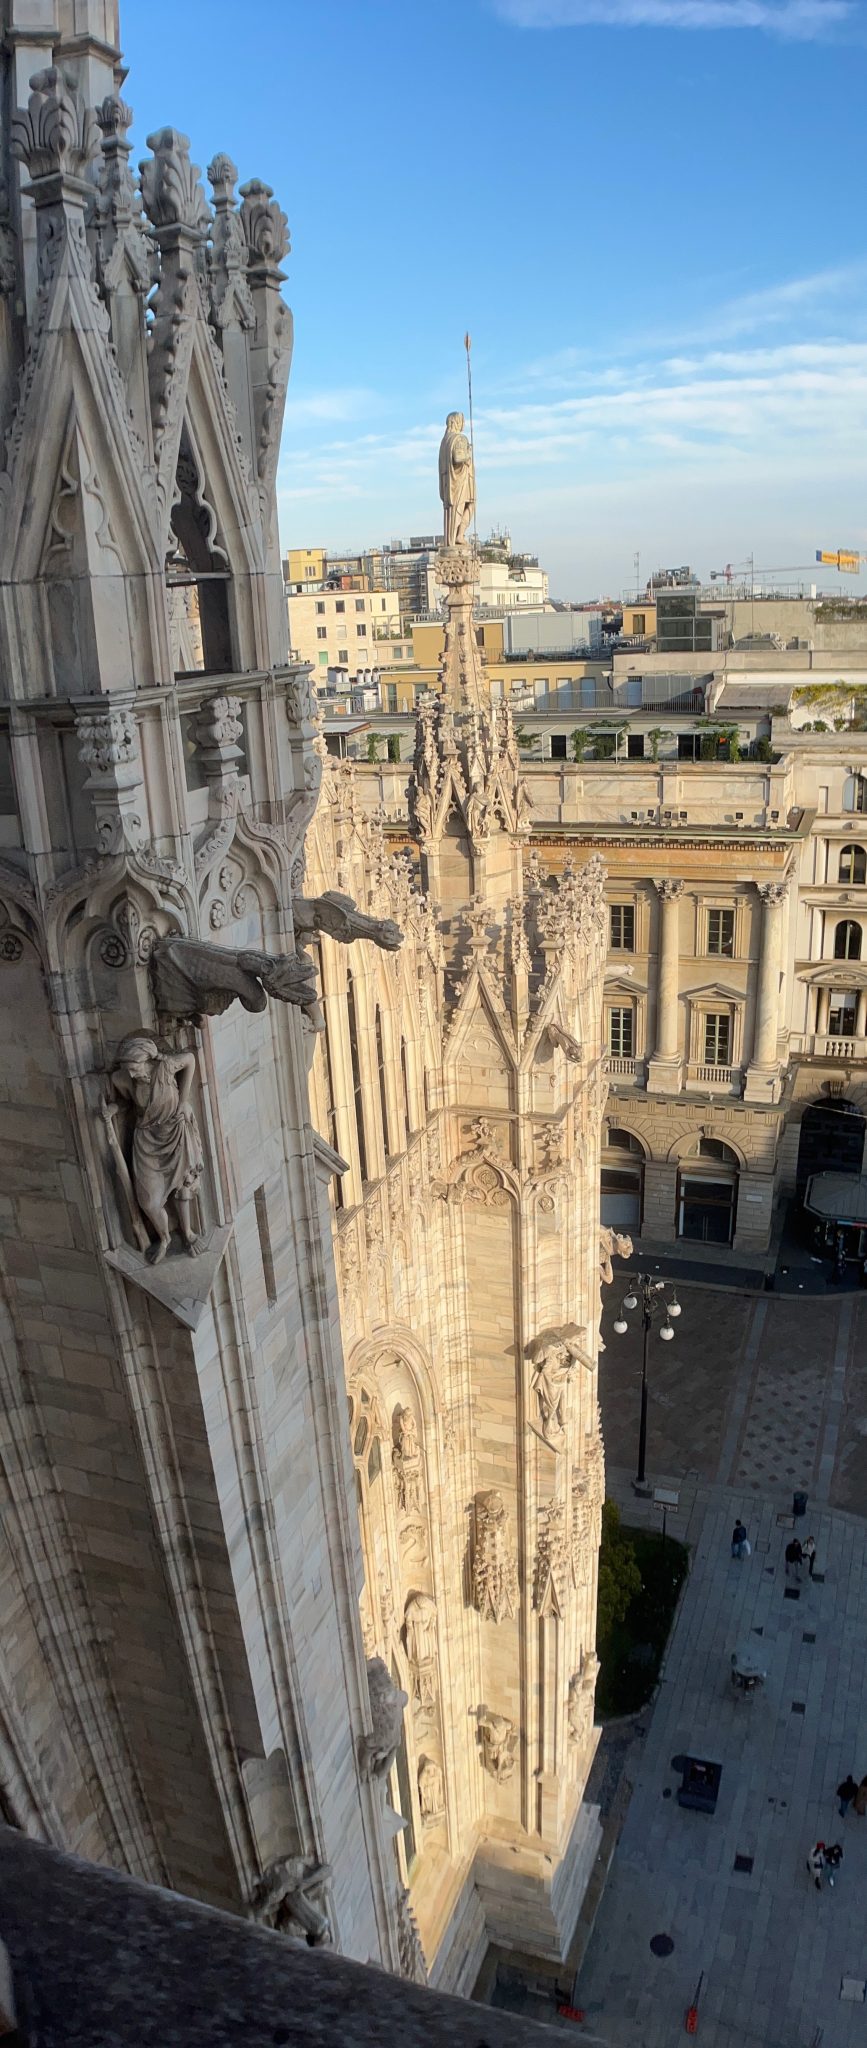 Standing guard over the Duomo di Milano, Milan, Italy